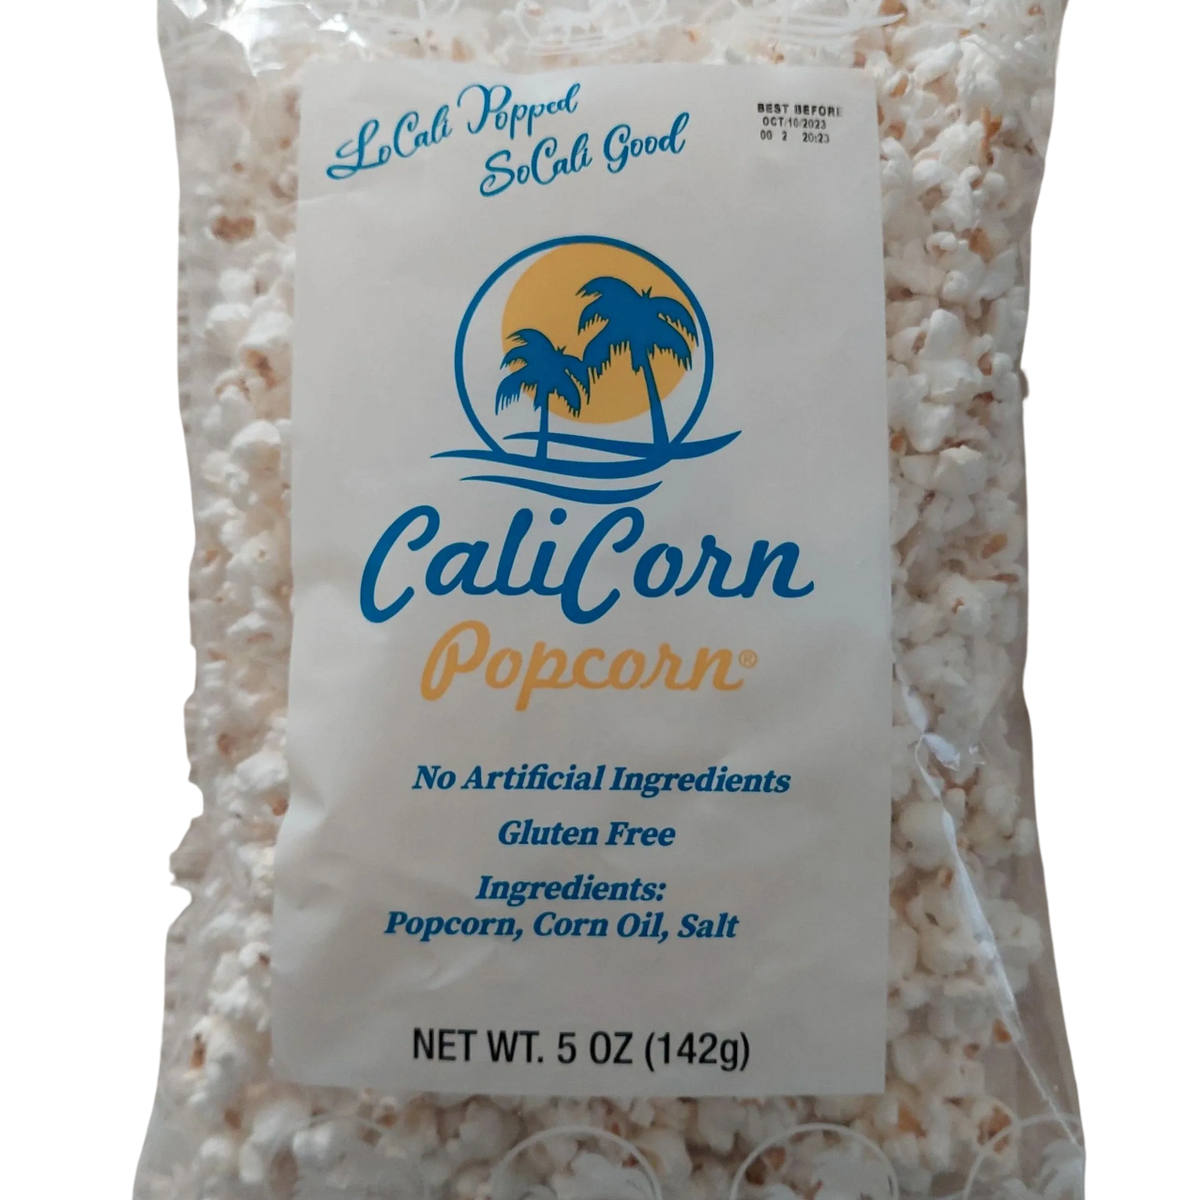 6 Calicorn case Popcorn, of